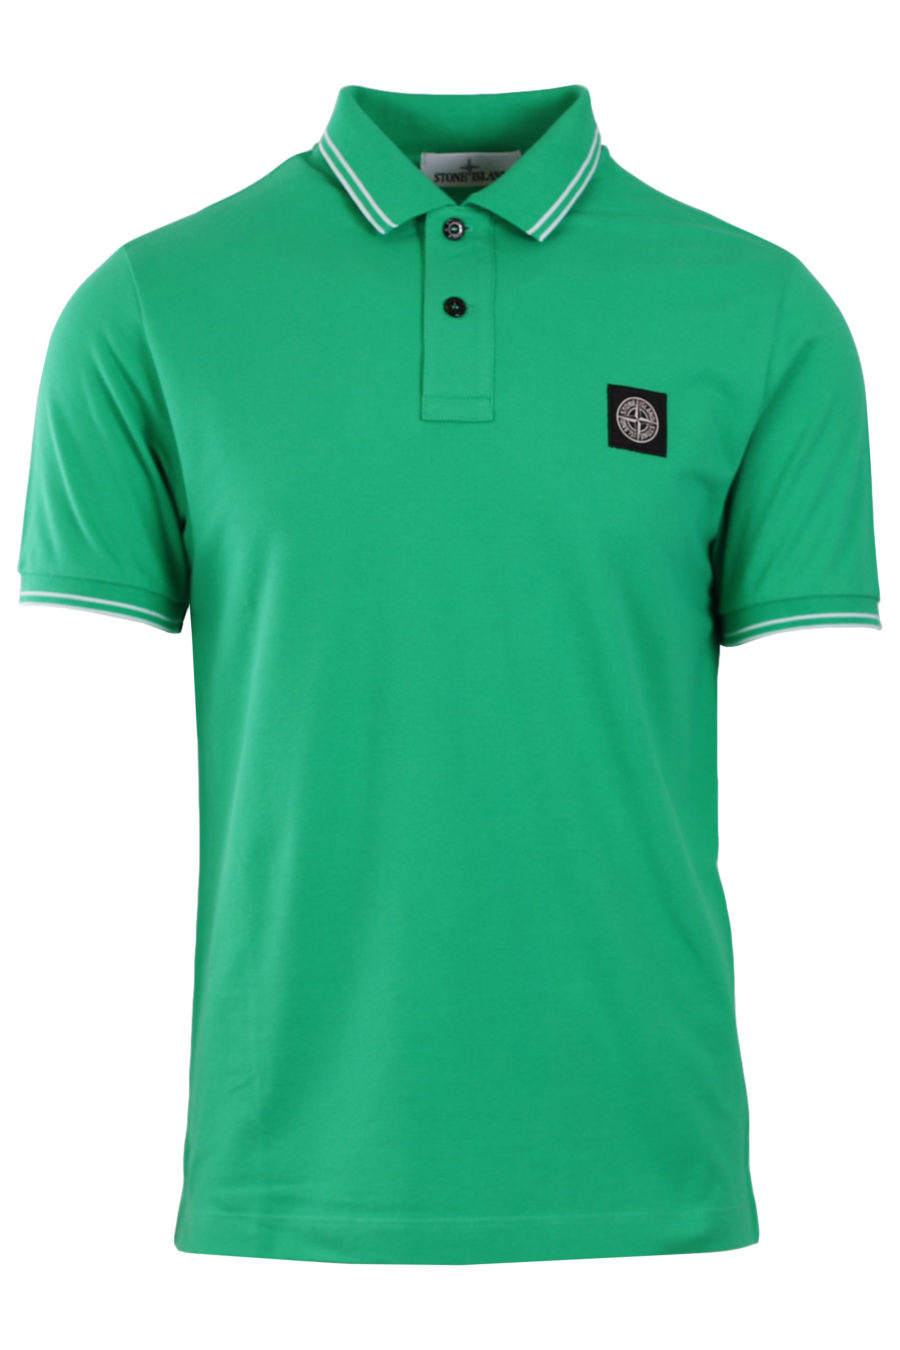 Green polo shirt with white stripes - 442f3f37384ebbb487c6f1248d77ecb81a3ce1c9